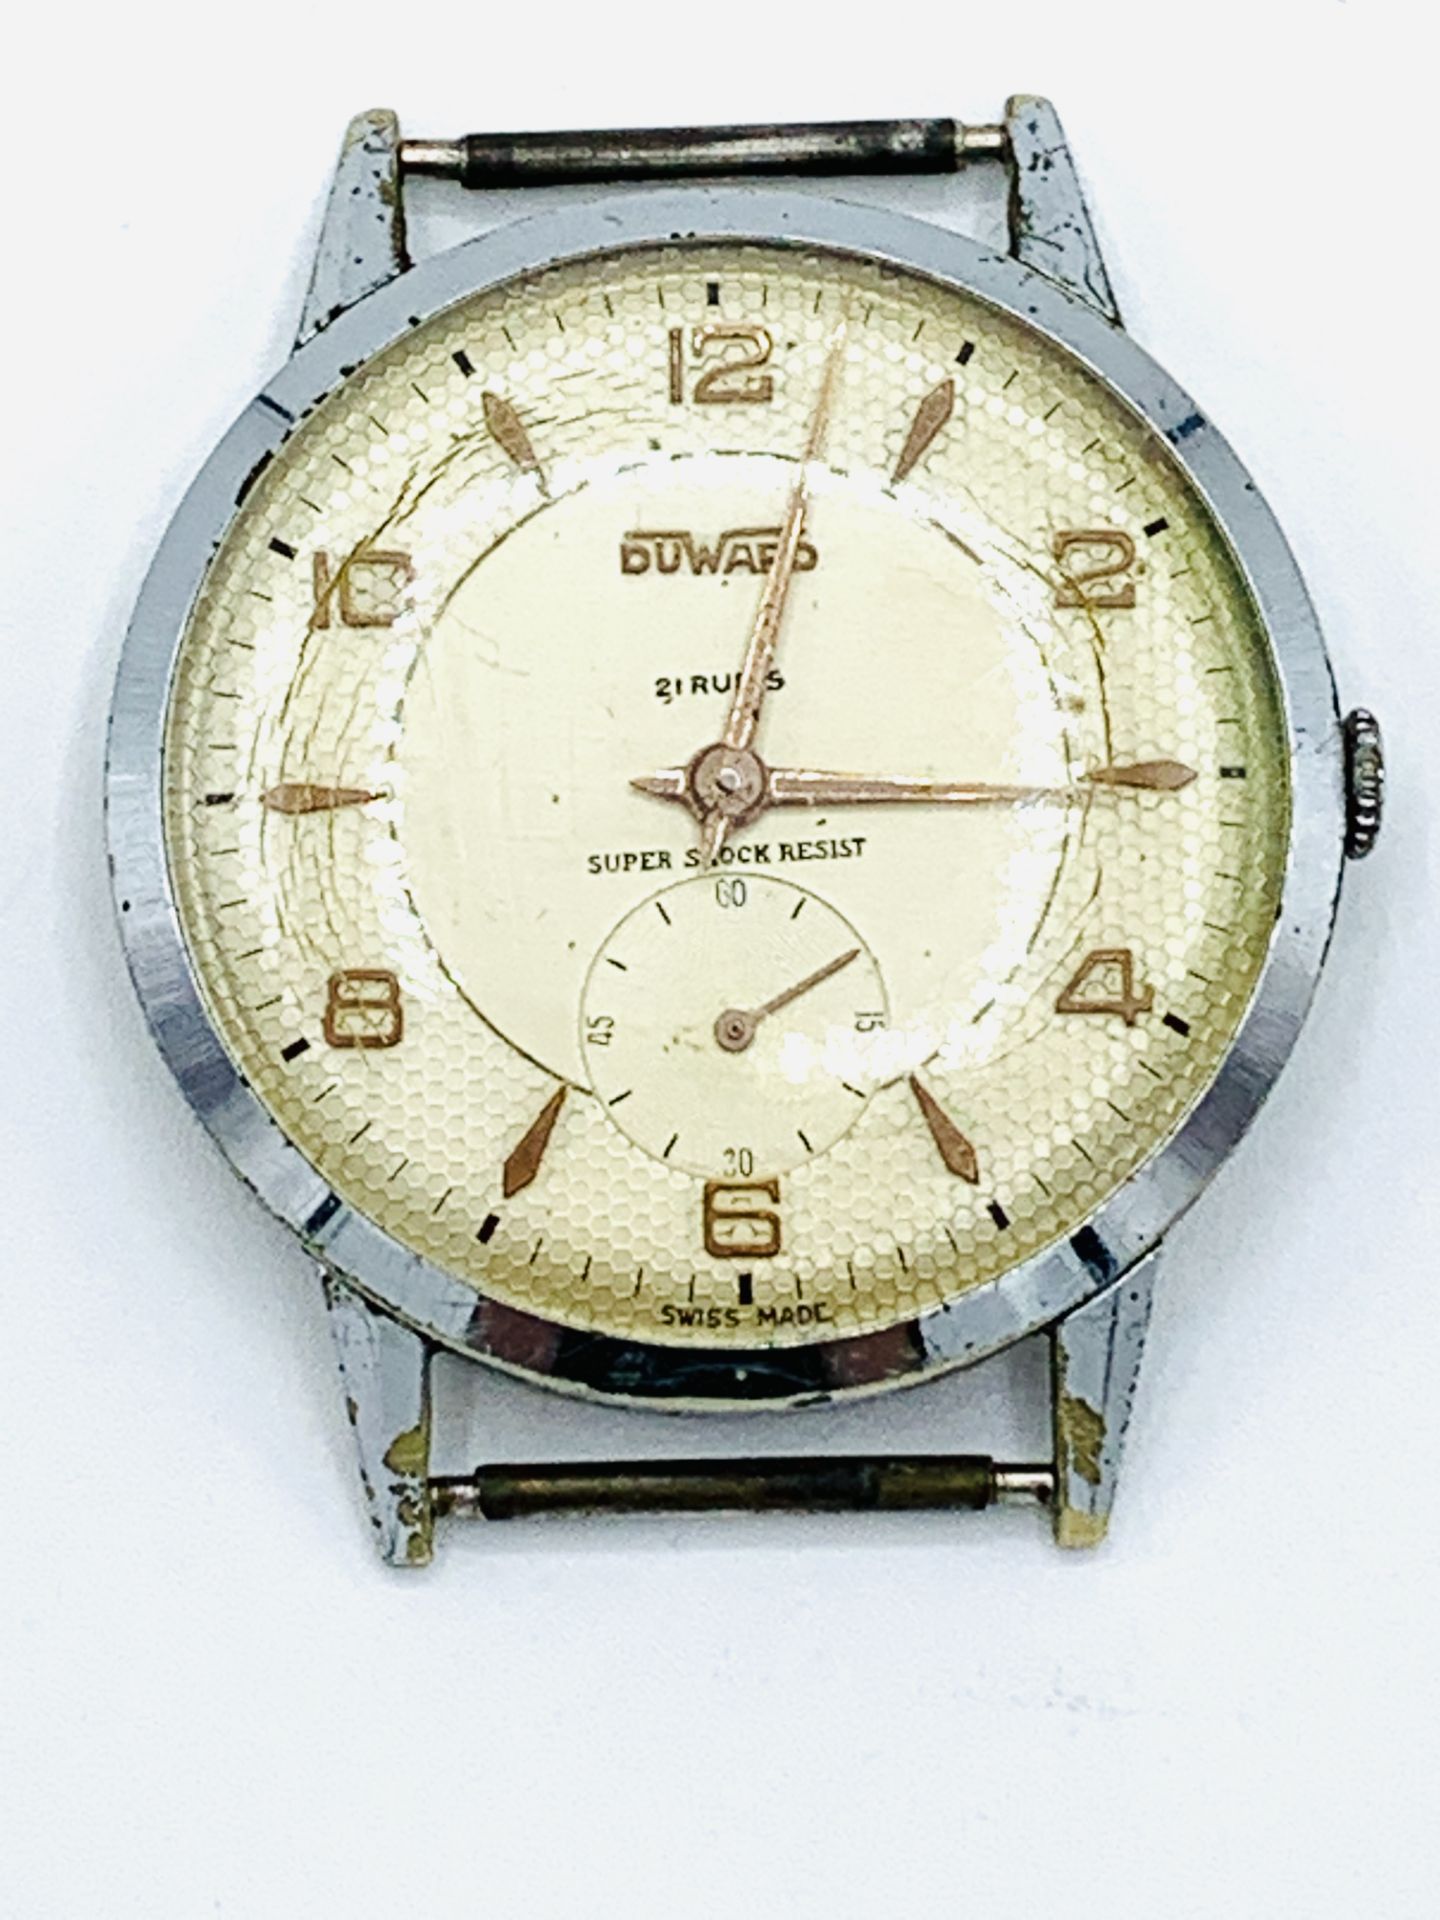 Duward 21 rubis Super Shock Resistant manual wind Swiss made wrist watch - Image 5 of 5